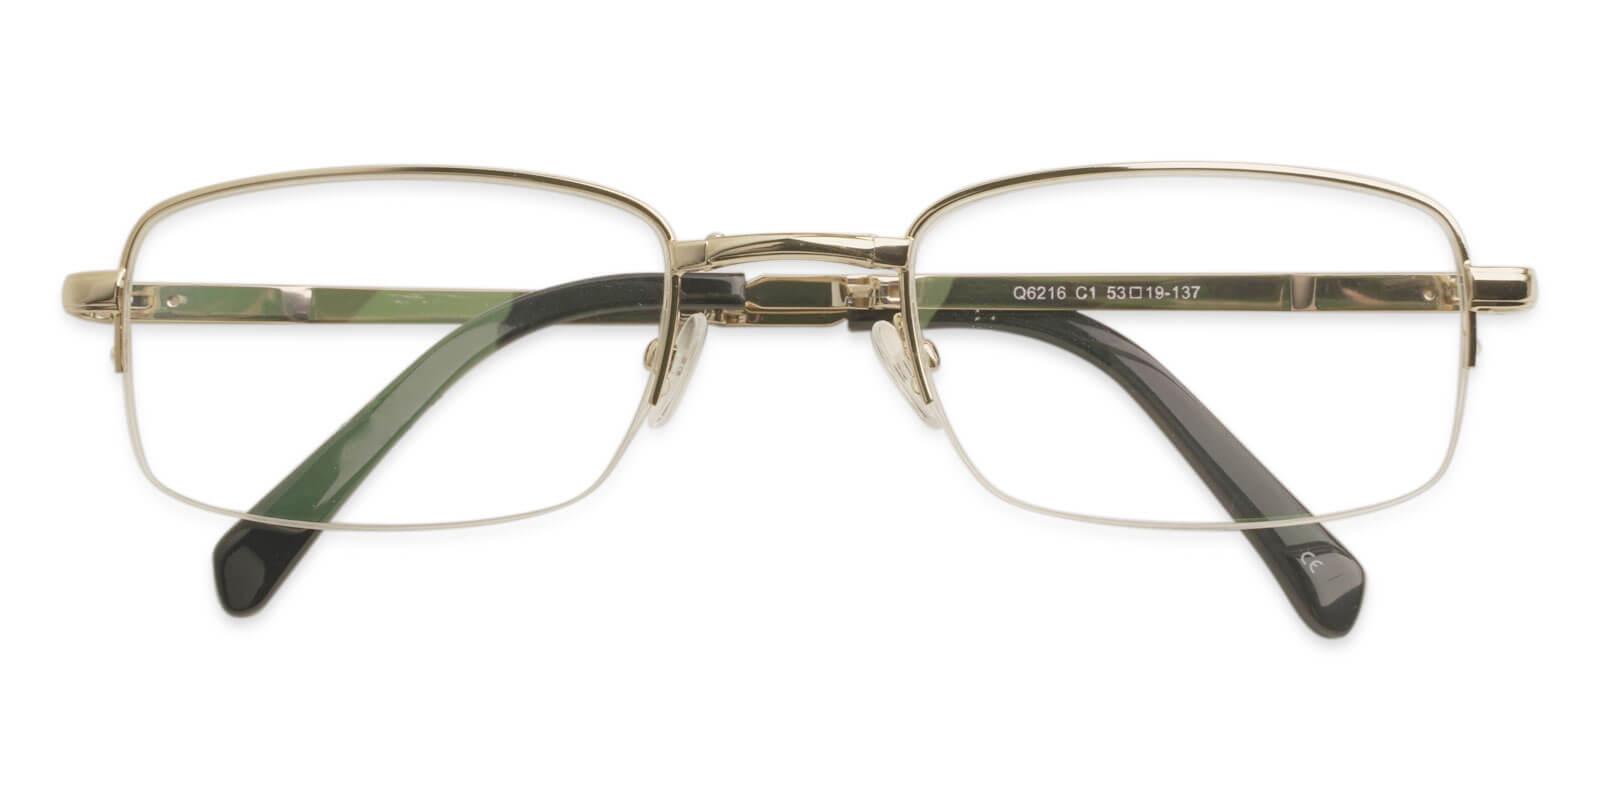 Carson Gold Metal Eyeglasses , Foldable , NosePads Frames from ABBE Glasses